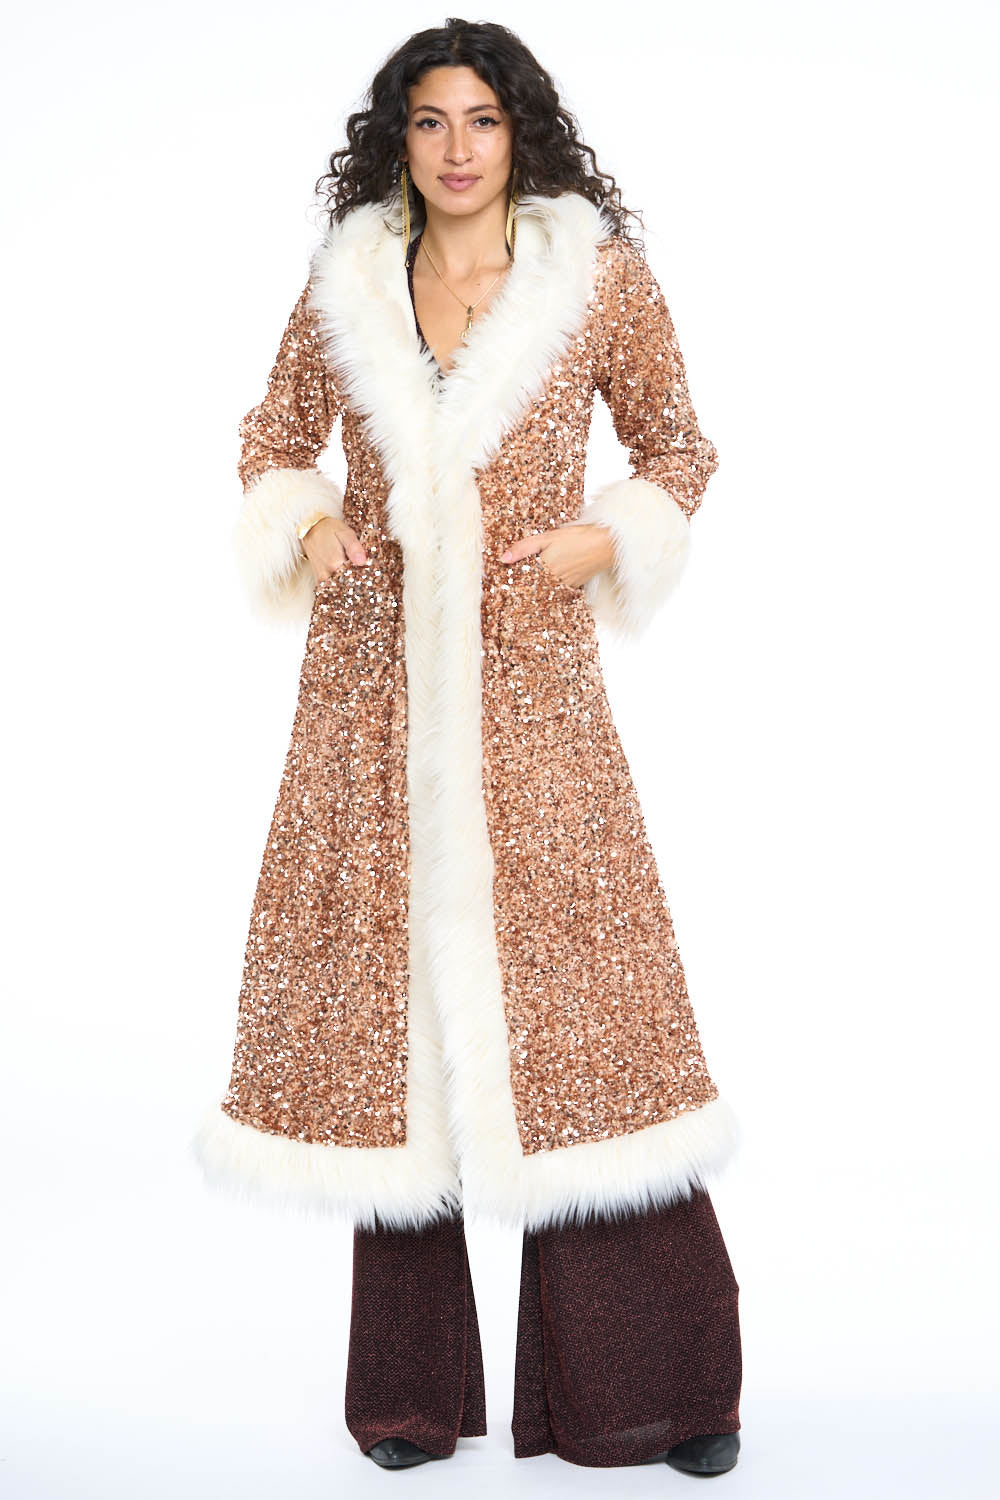 Deluxe Tamo Coat: Copper Starlight Sequin + Cream Faux Fur Trim